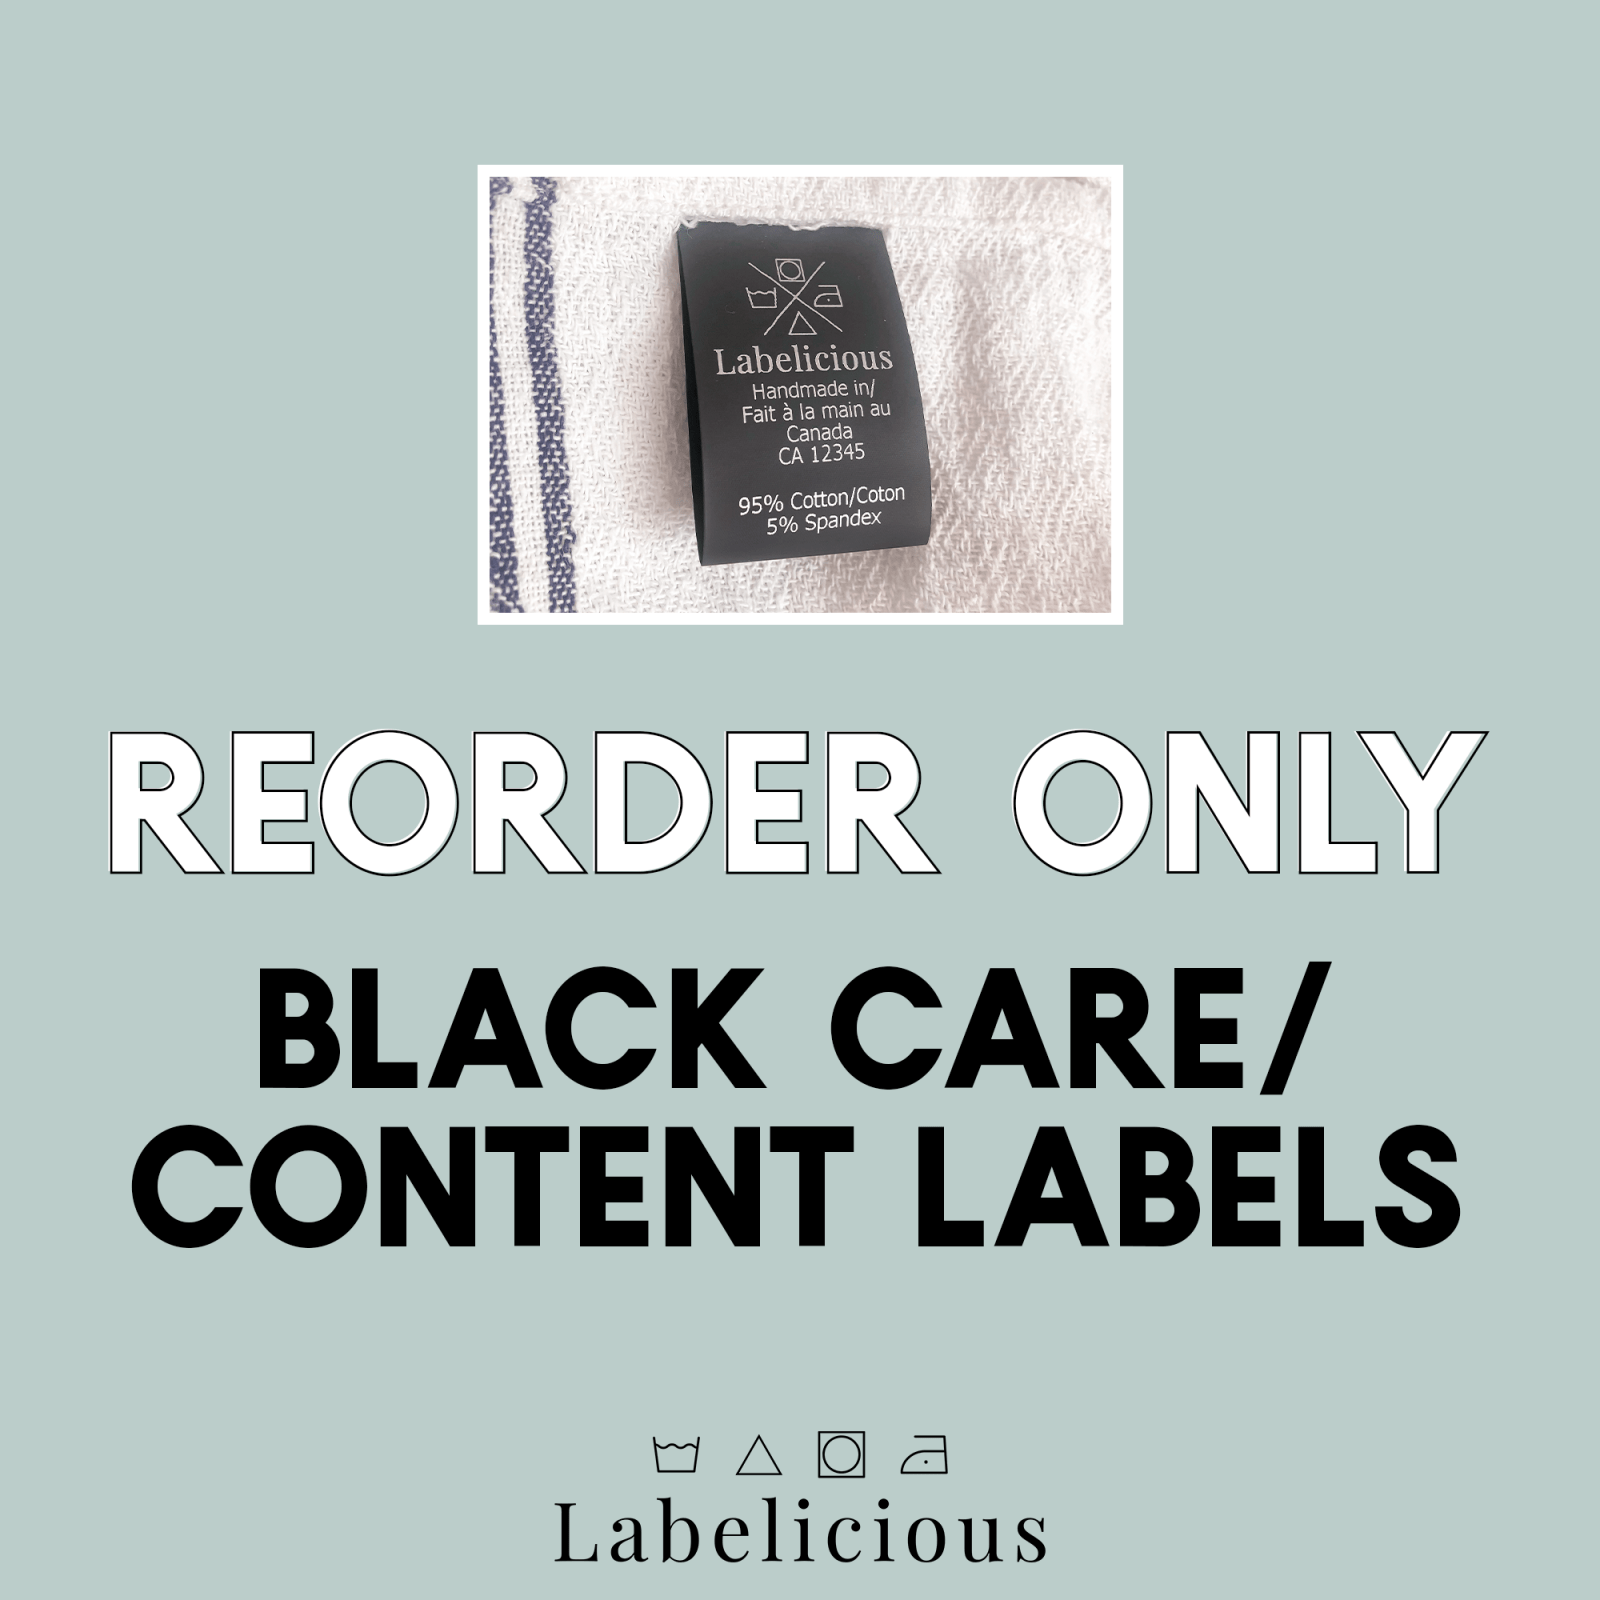 re-order-black-polyester-carecontent-labels-569143.png